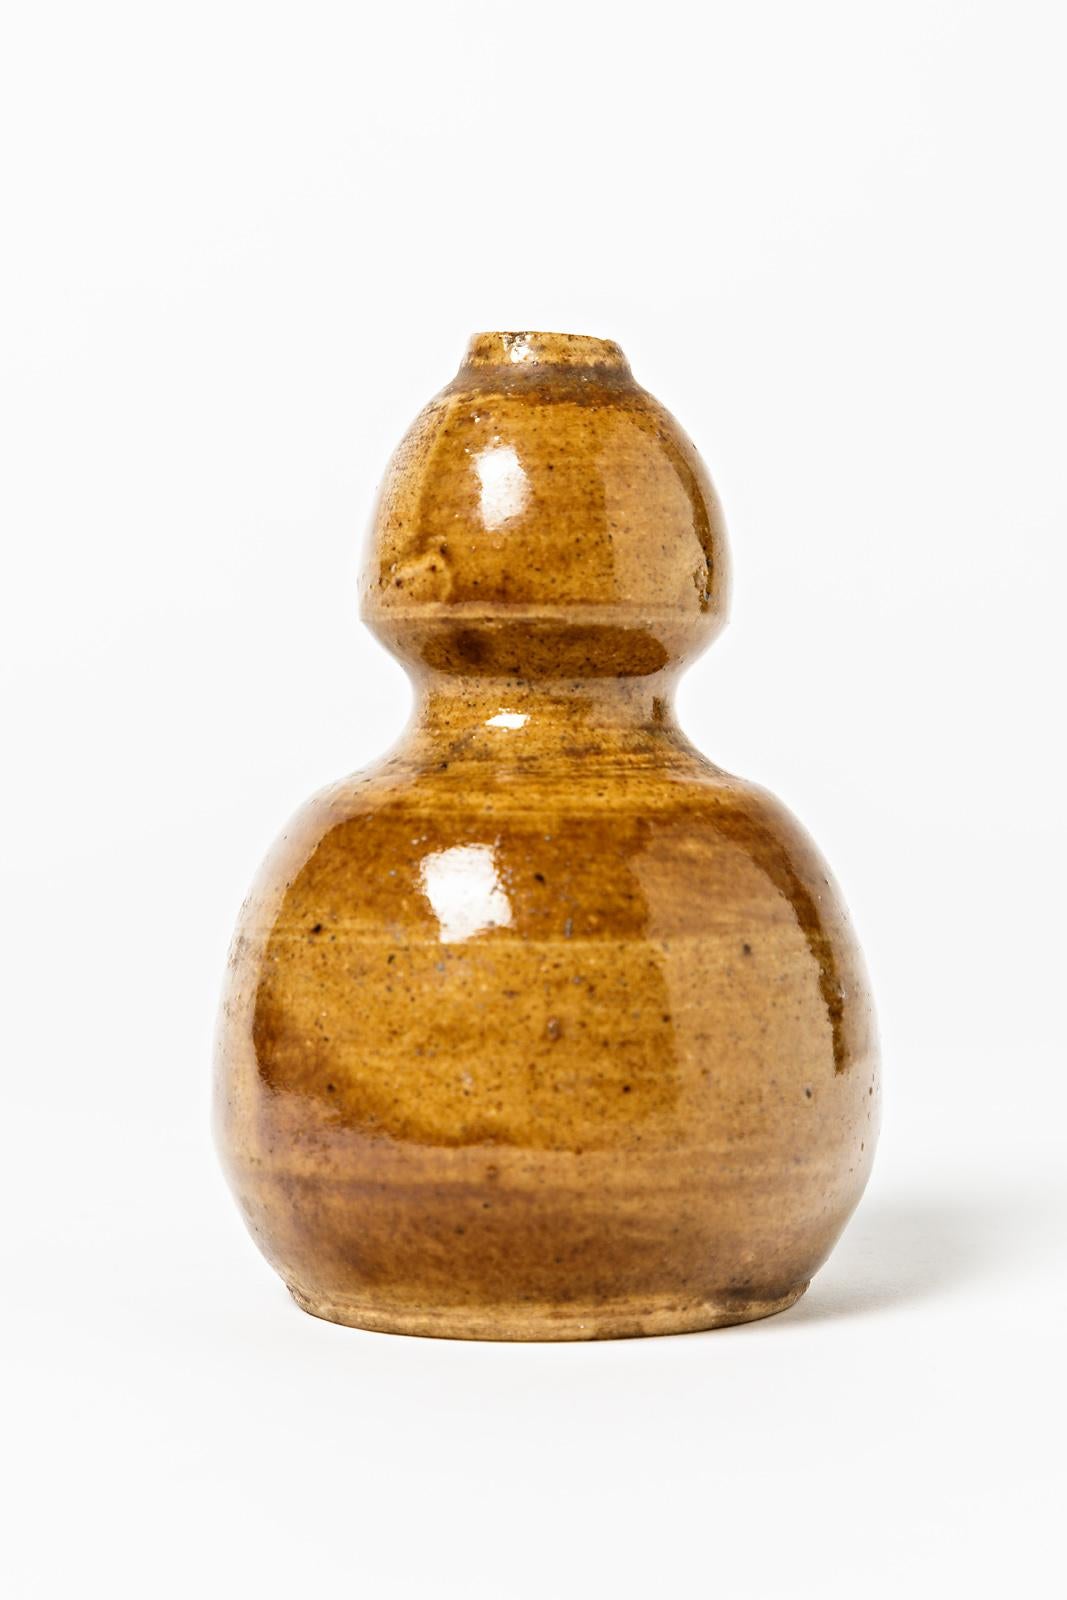 20th Century Decorative Art Nouveau Small Yellow Stoneware Ceramic Vase, 1900 For Sale